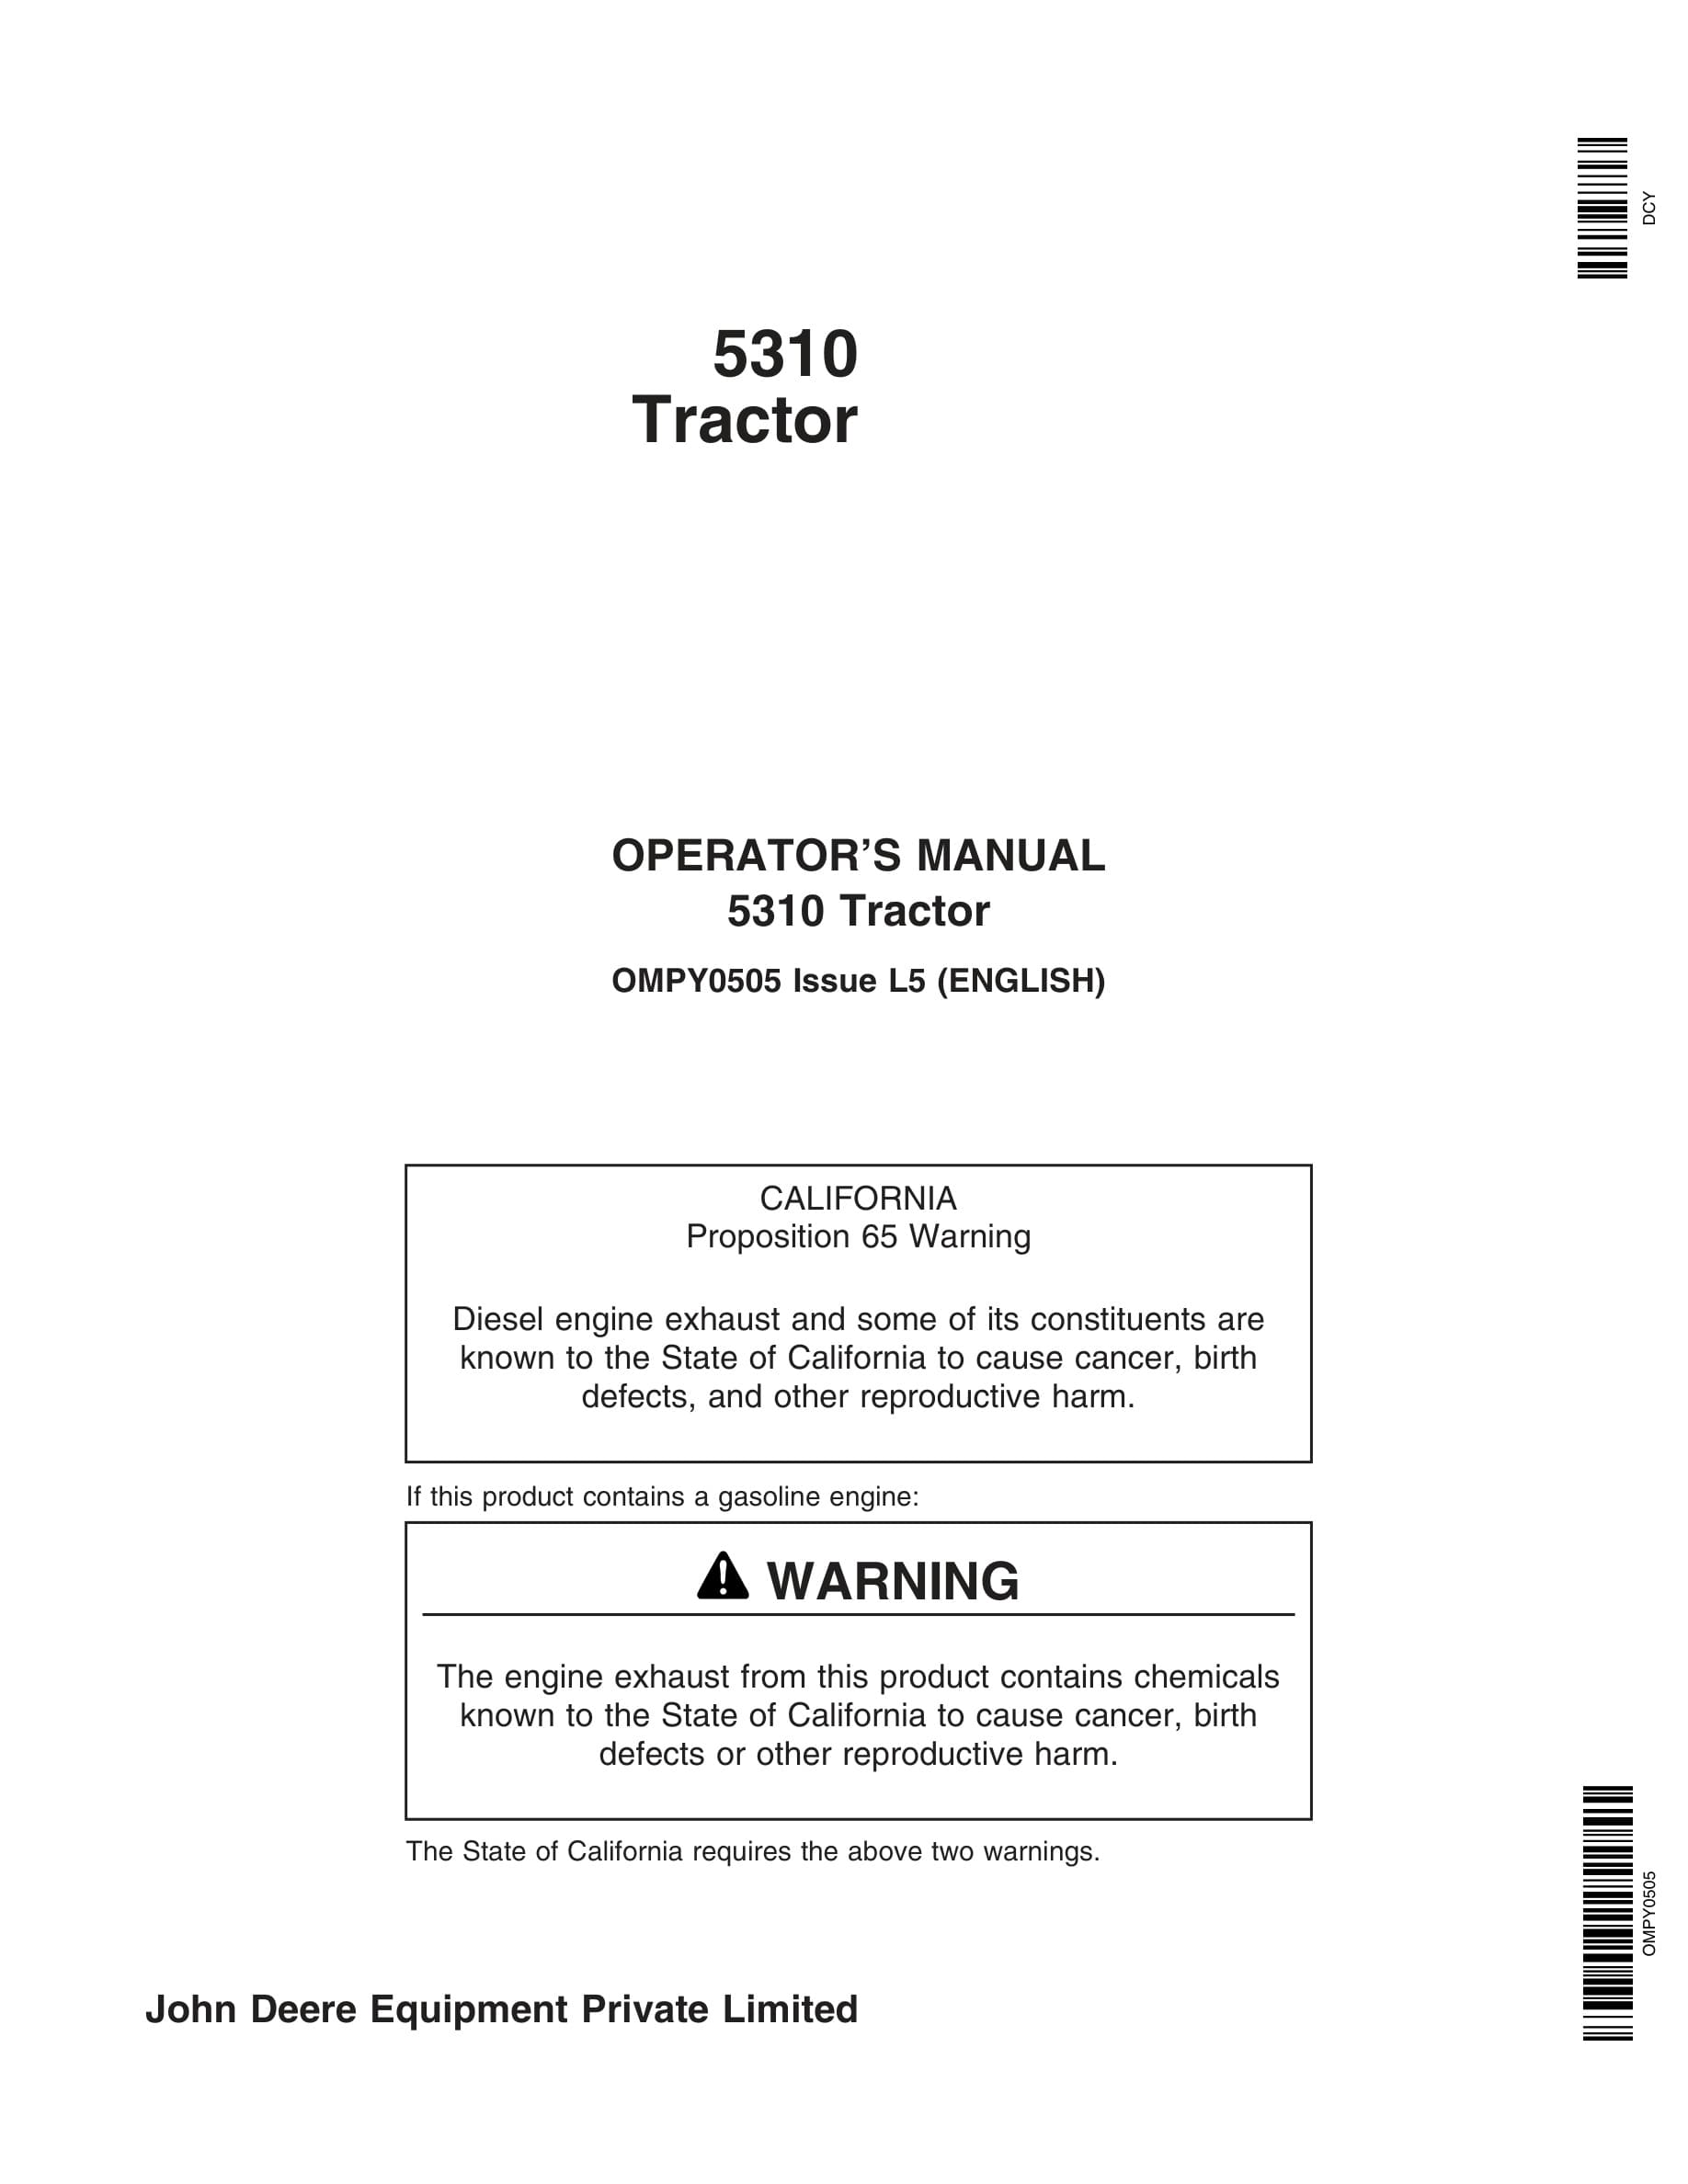 John Deere 5310 Tractors Operator Manual OMPY0505-1